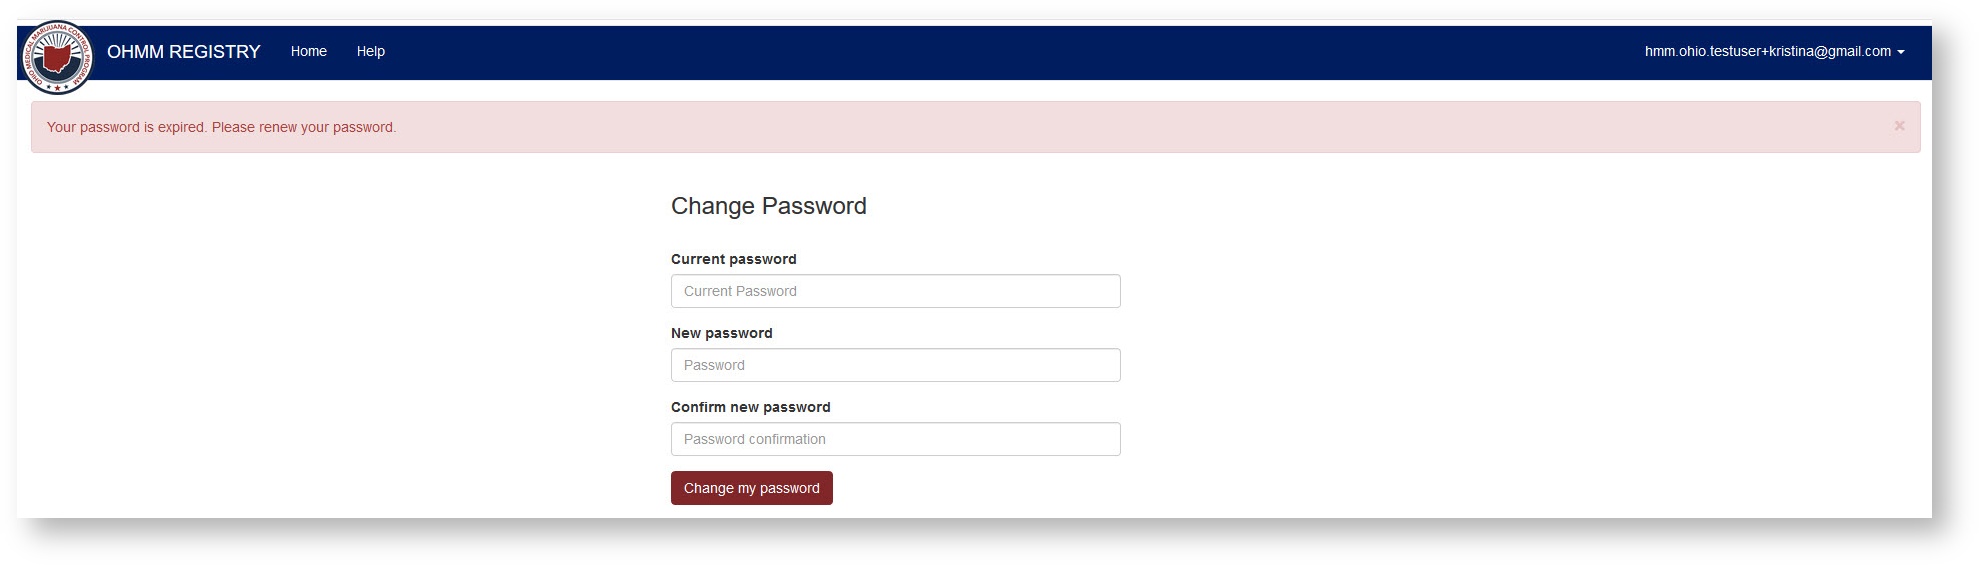 mmr_password_expired_change_password.jpg